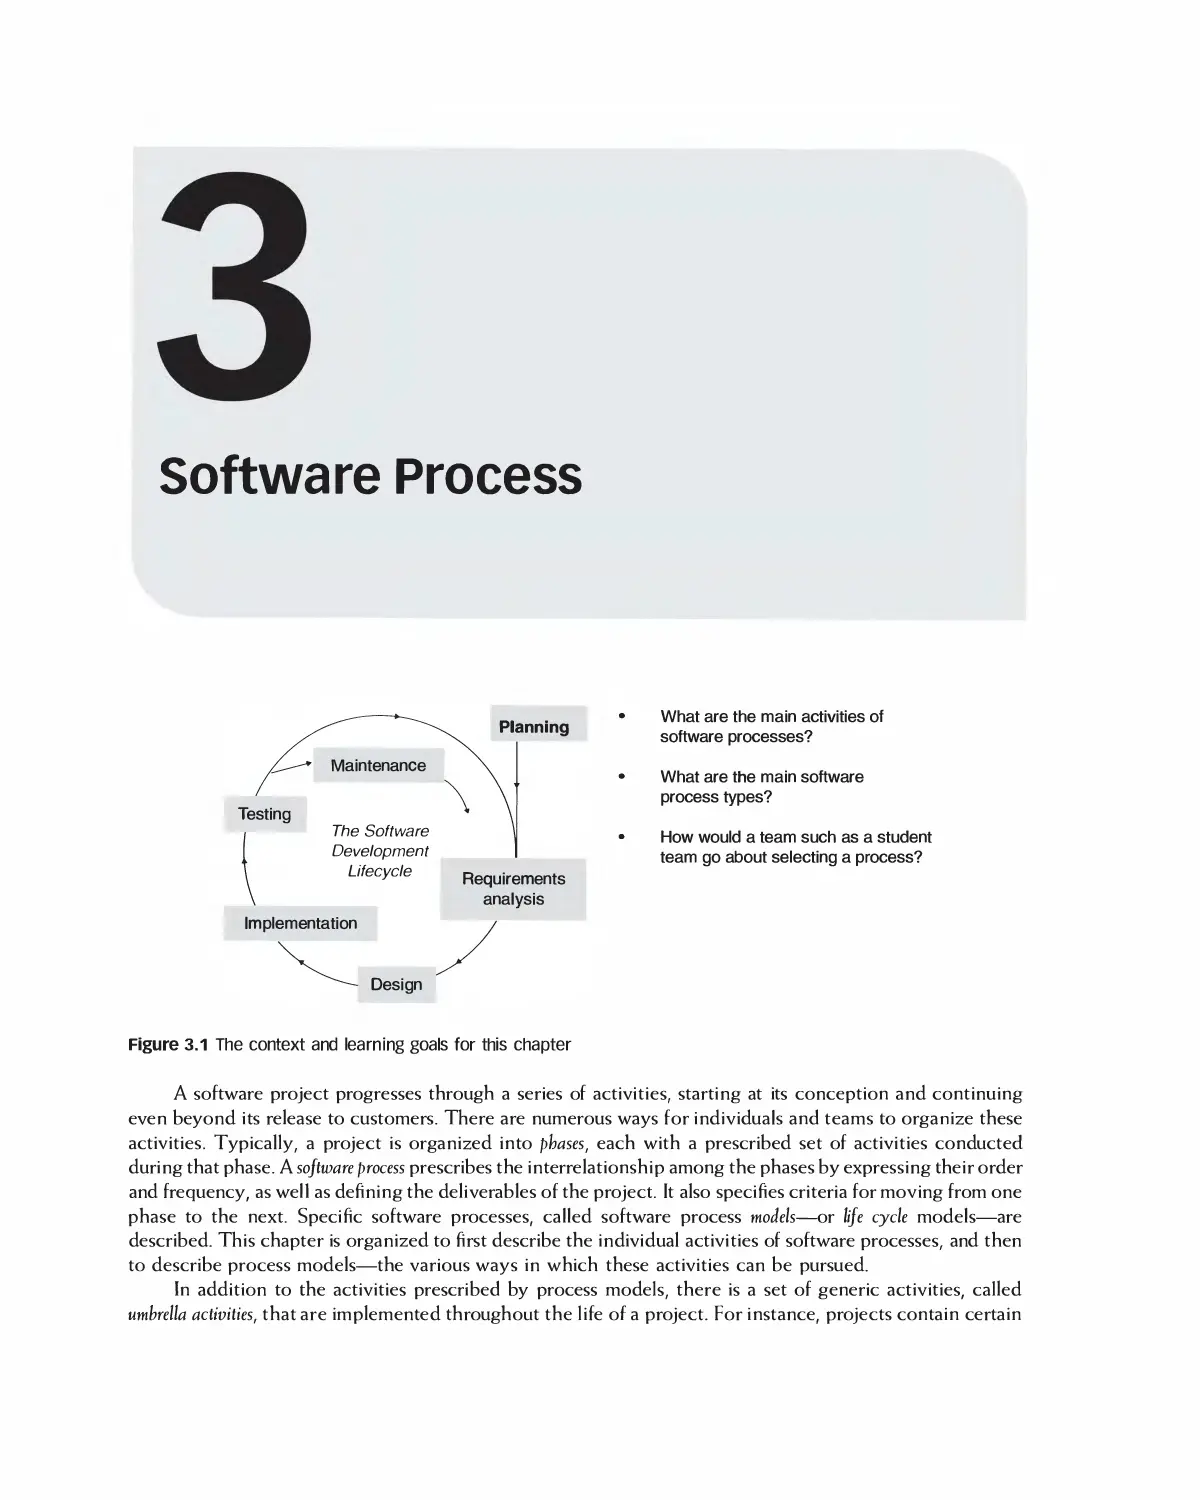 PART II: Software Process